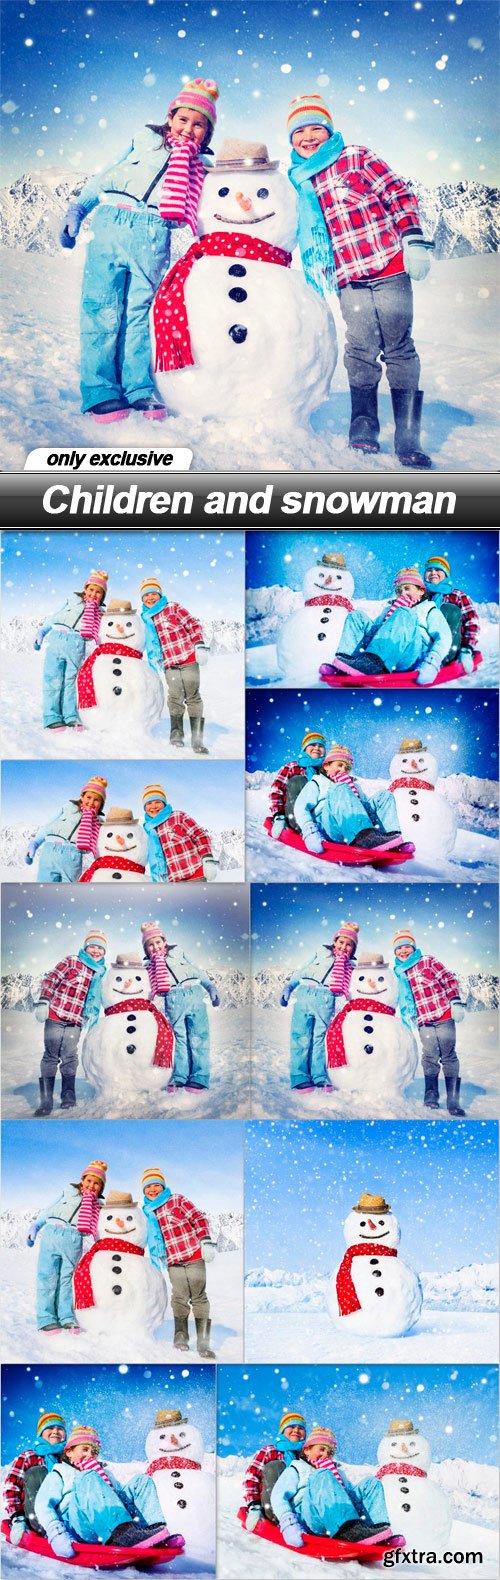 Children and snowman - 10 UHQ JPEG